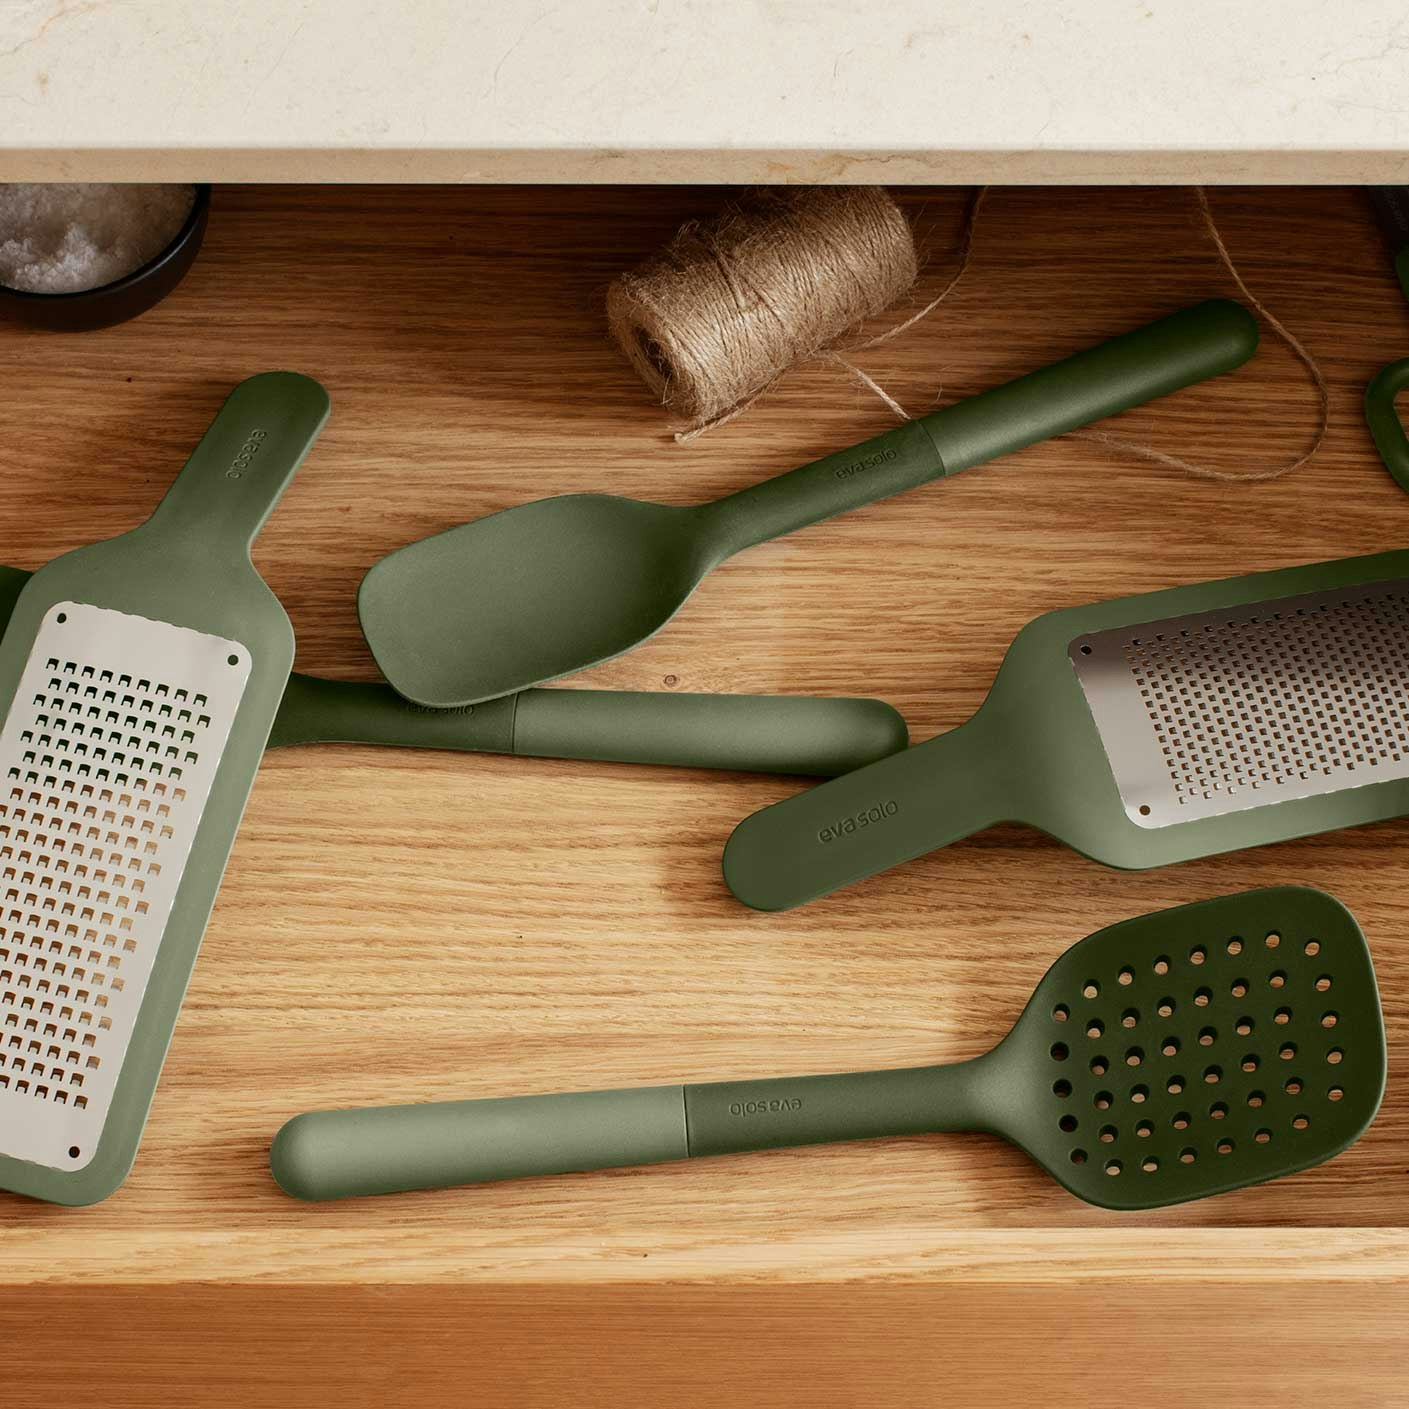 https://royaldesign.com/image/11/eva-solo-green-tools-slotted-spoon-0